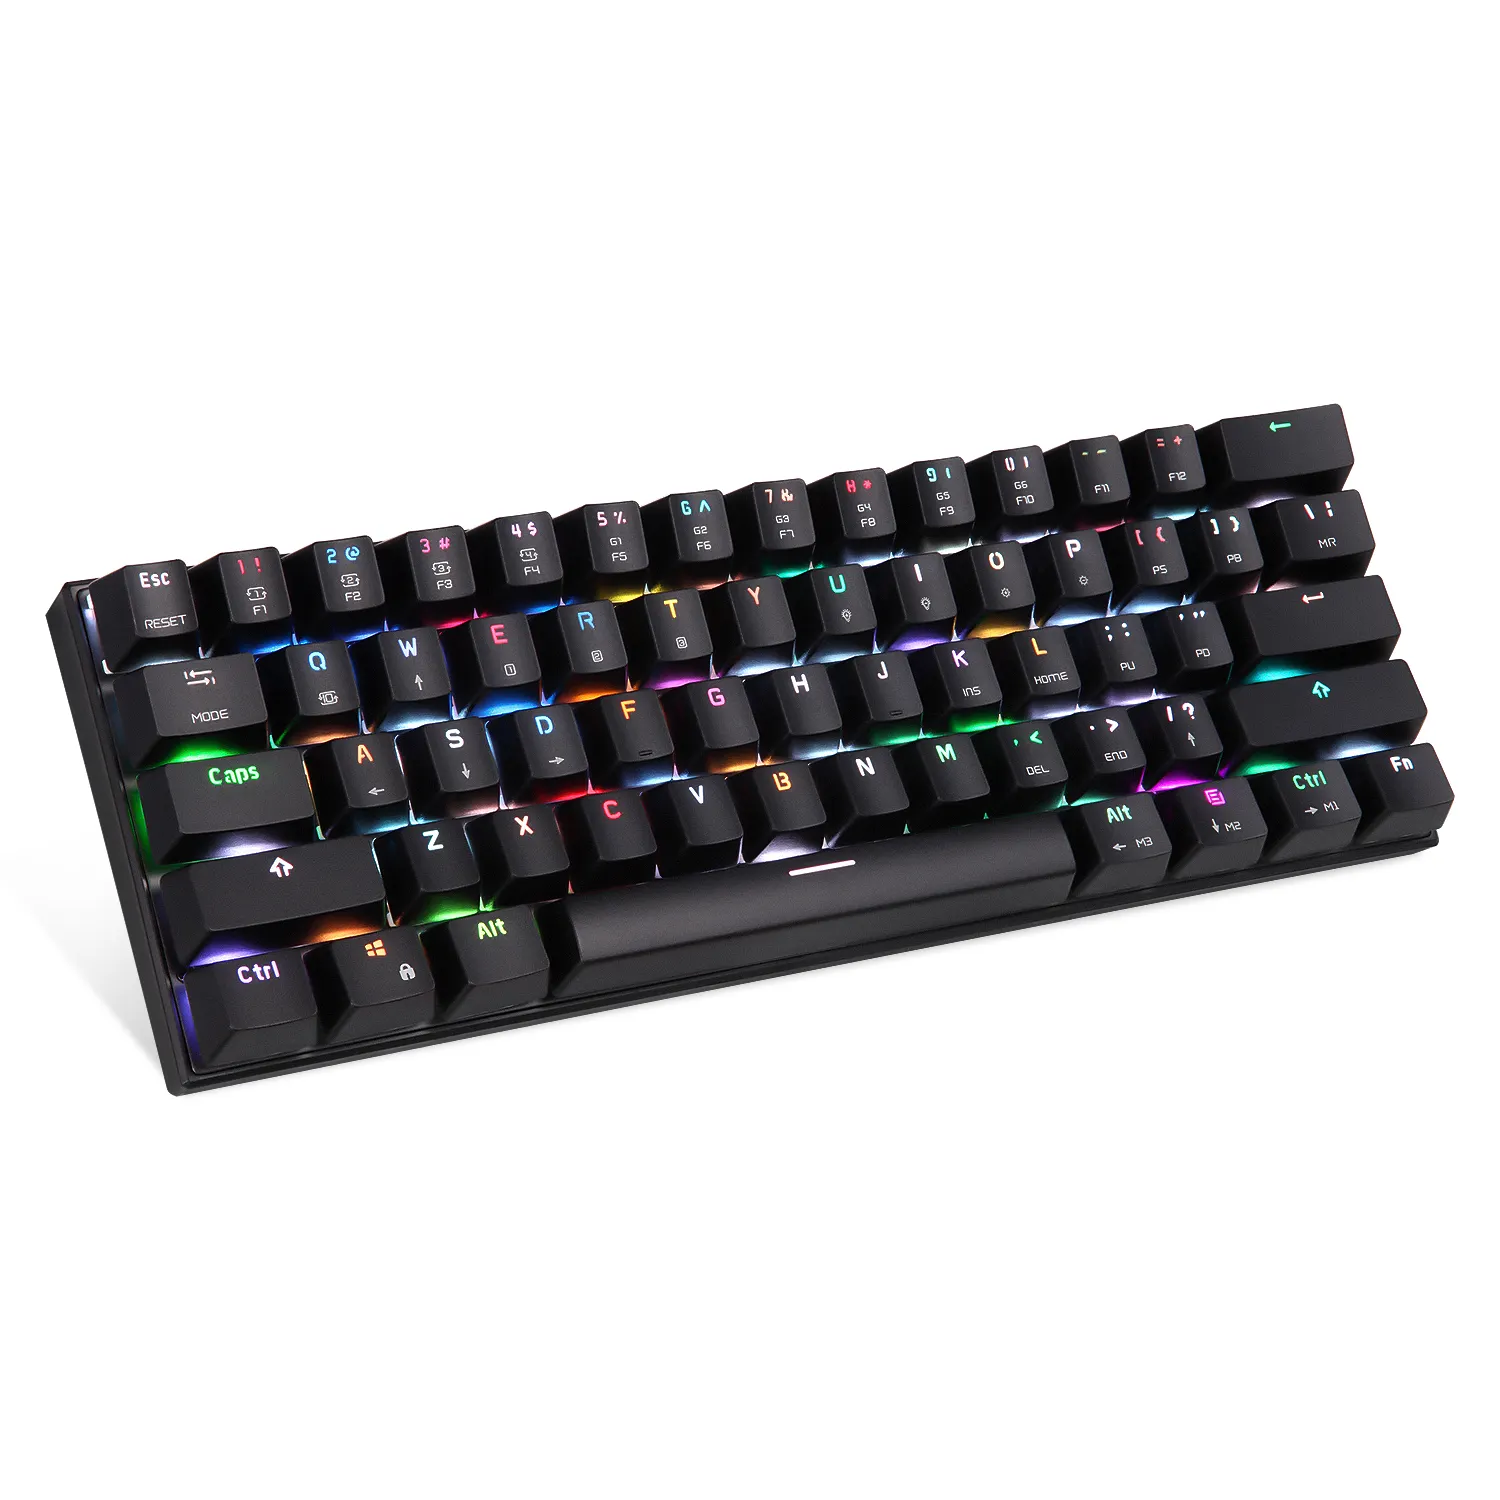 Ancreu CK61 RGB-لوحة مفاتيح ميكانيكية إضاءة خلفية للاعبين, teclado mecanico للكمبيوتر/الكمبيوتر المكتبي